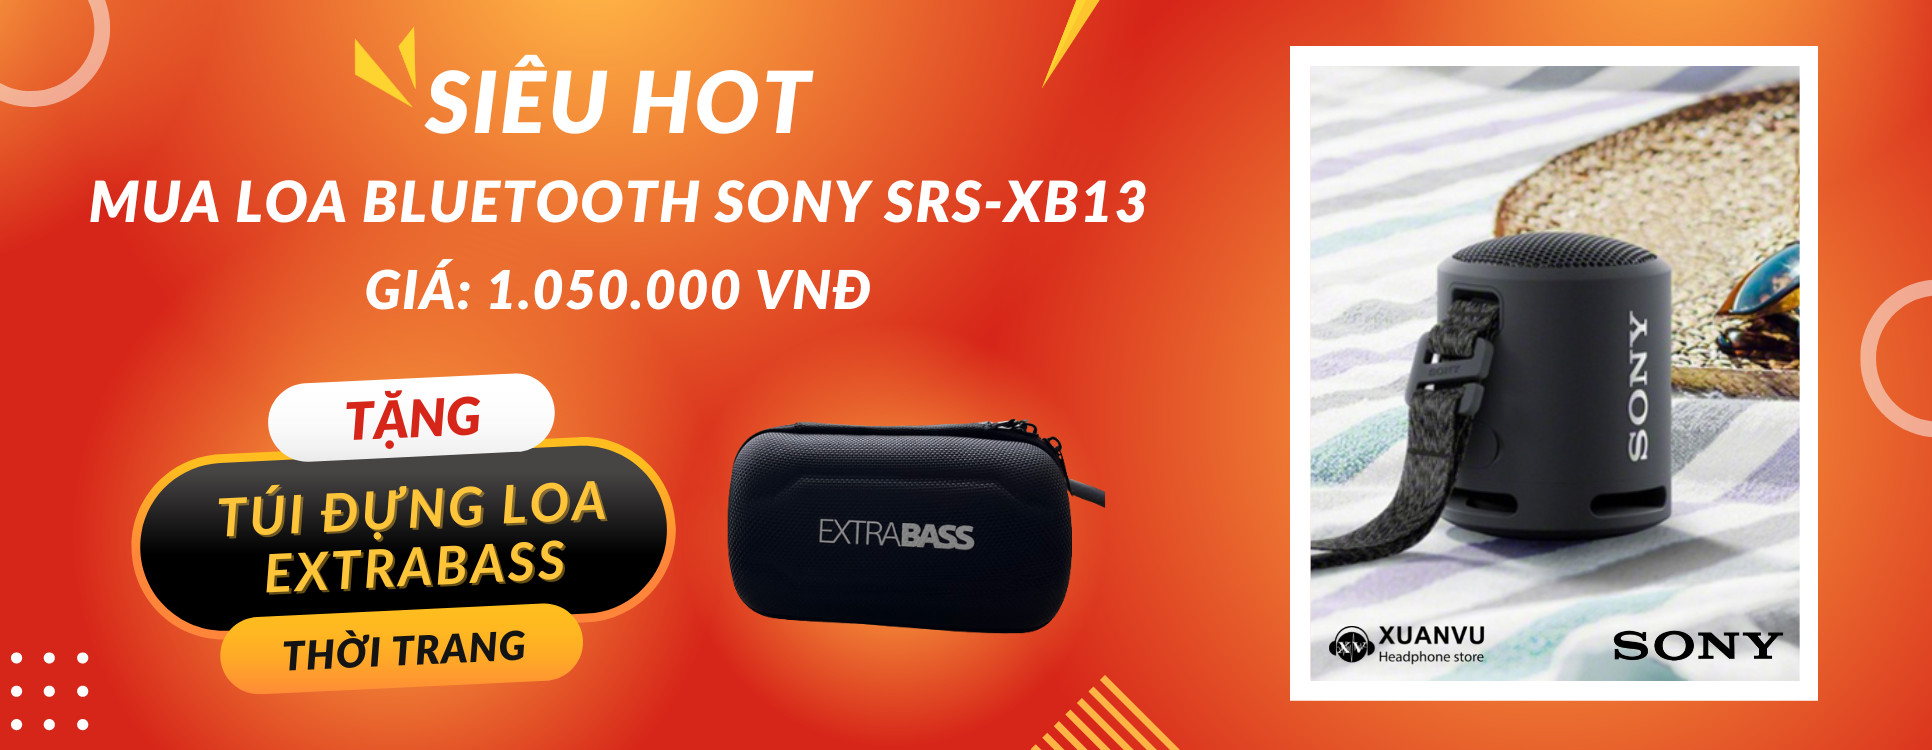 Mua loa Sony SRS-XB13, tặng túi Extrabass